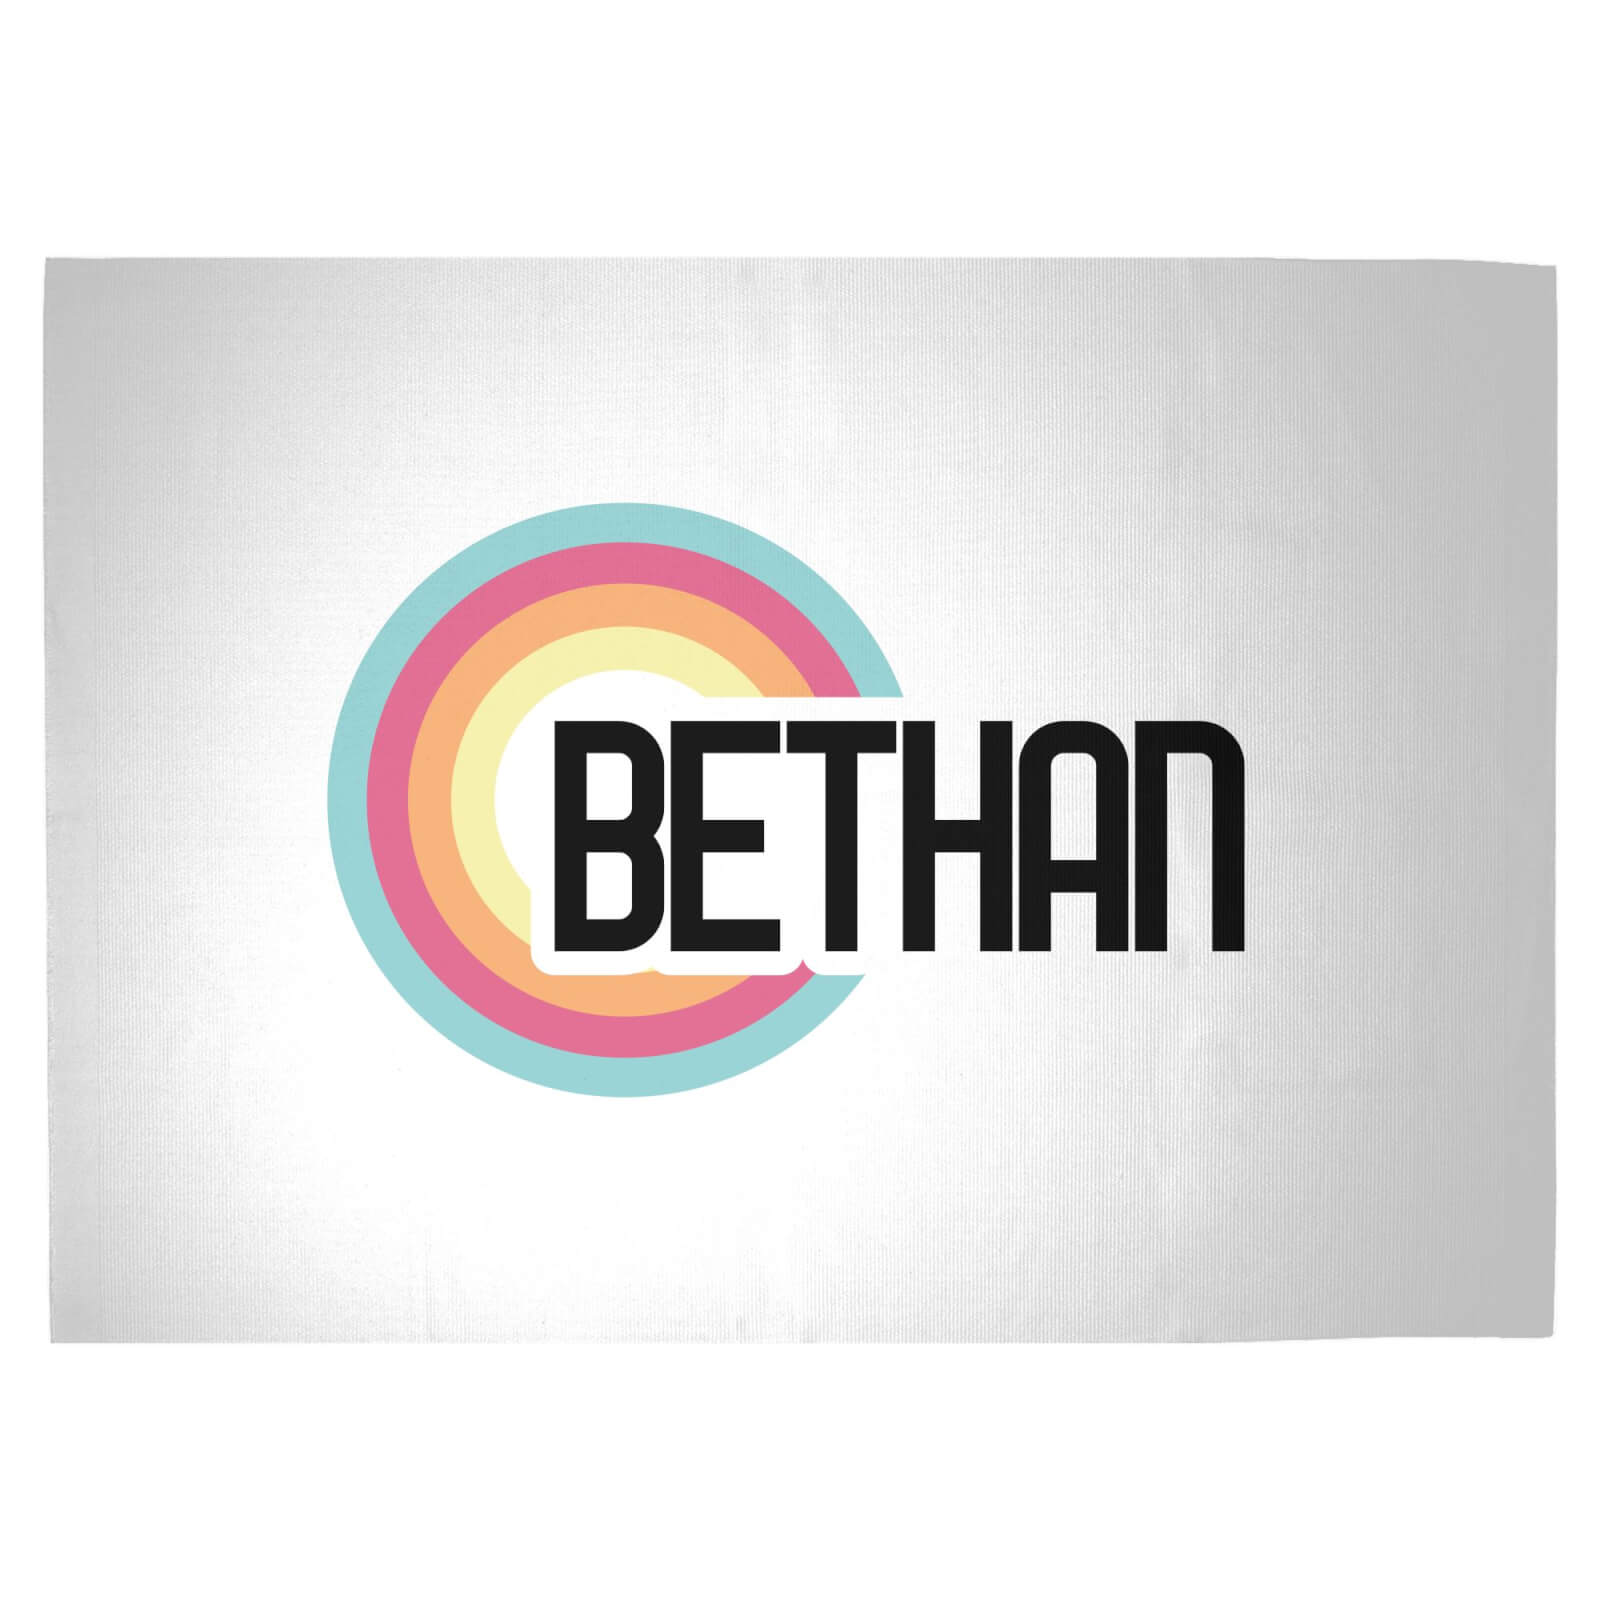 Bethan Rainbow Woven Rug - Large